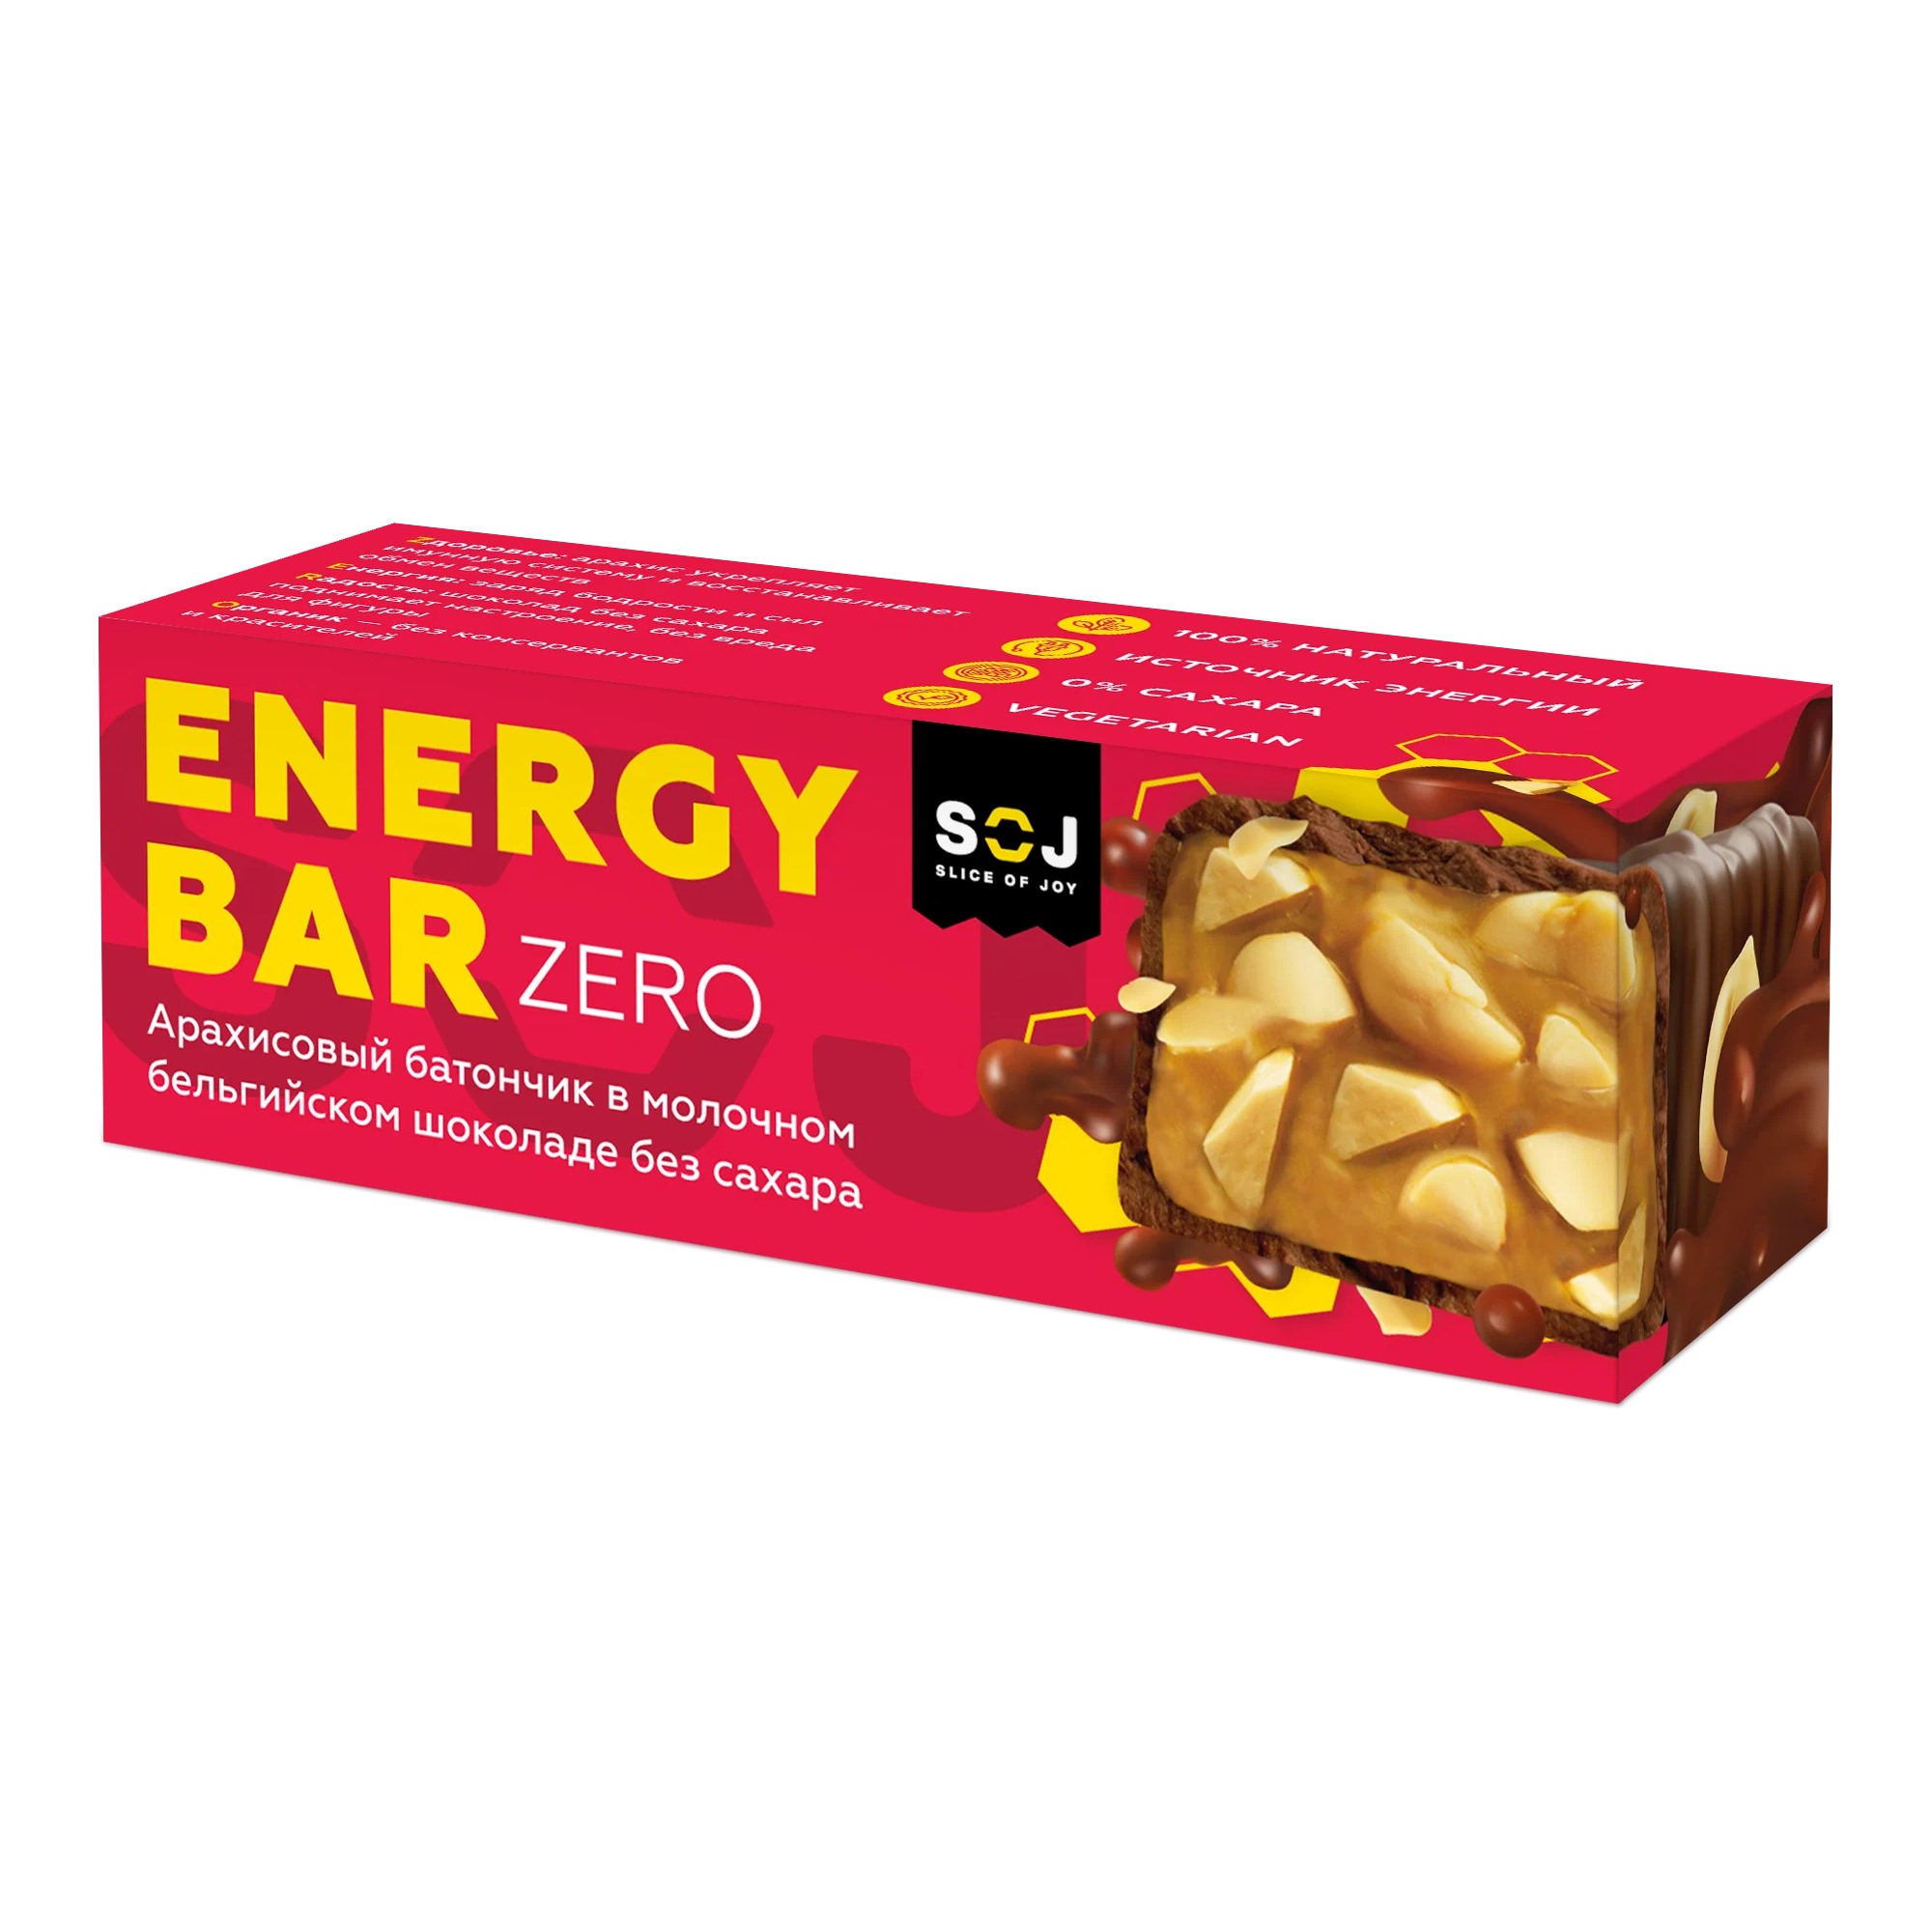 Арахисовый батончик SOJ Energy Bar В молочном шоколаде без сахара, 45 г - фото 1